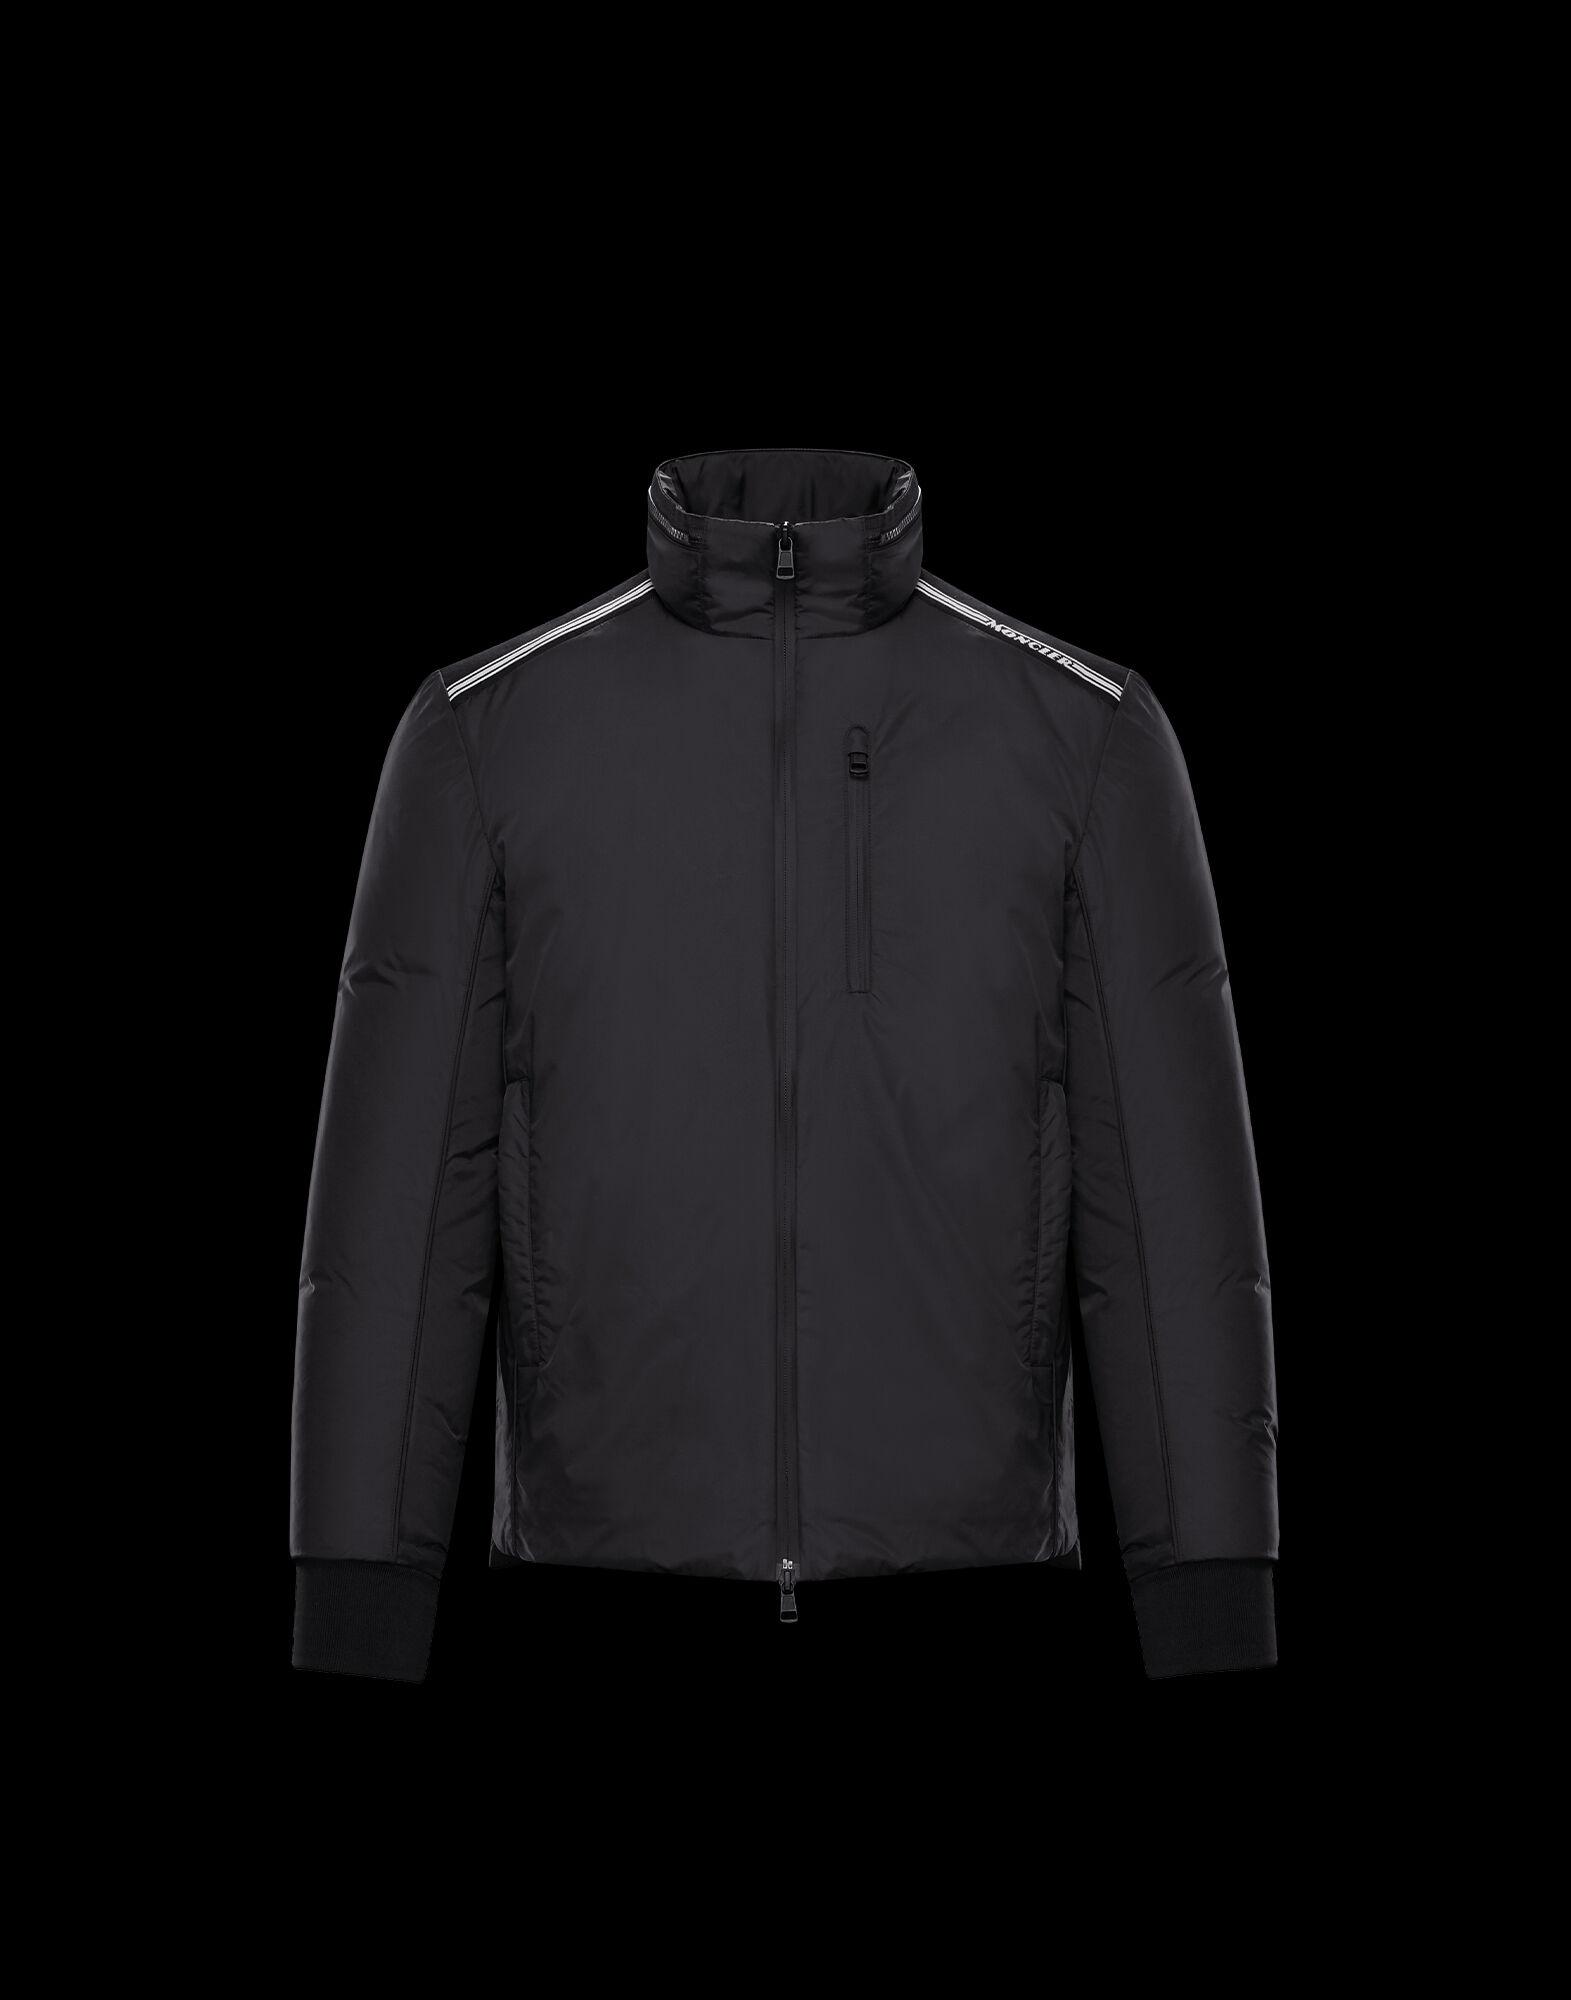 moncler premont jacket,OFF 69%,www.concordehotels.com.tr